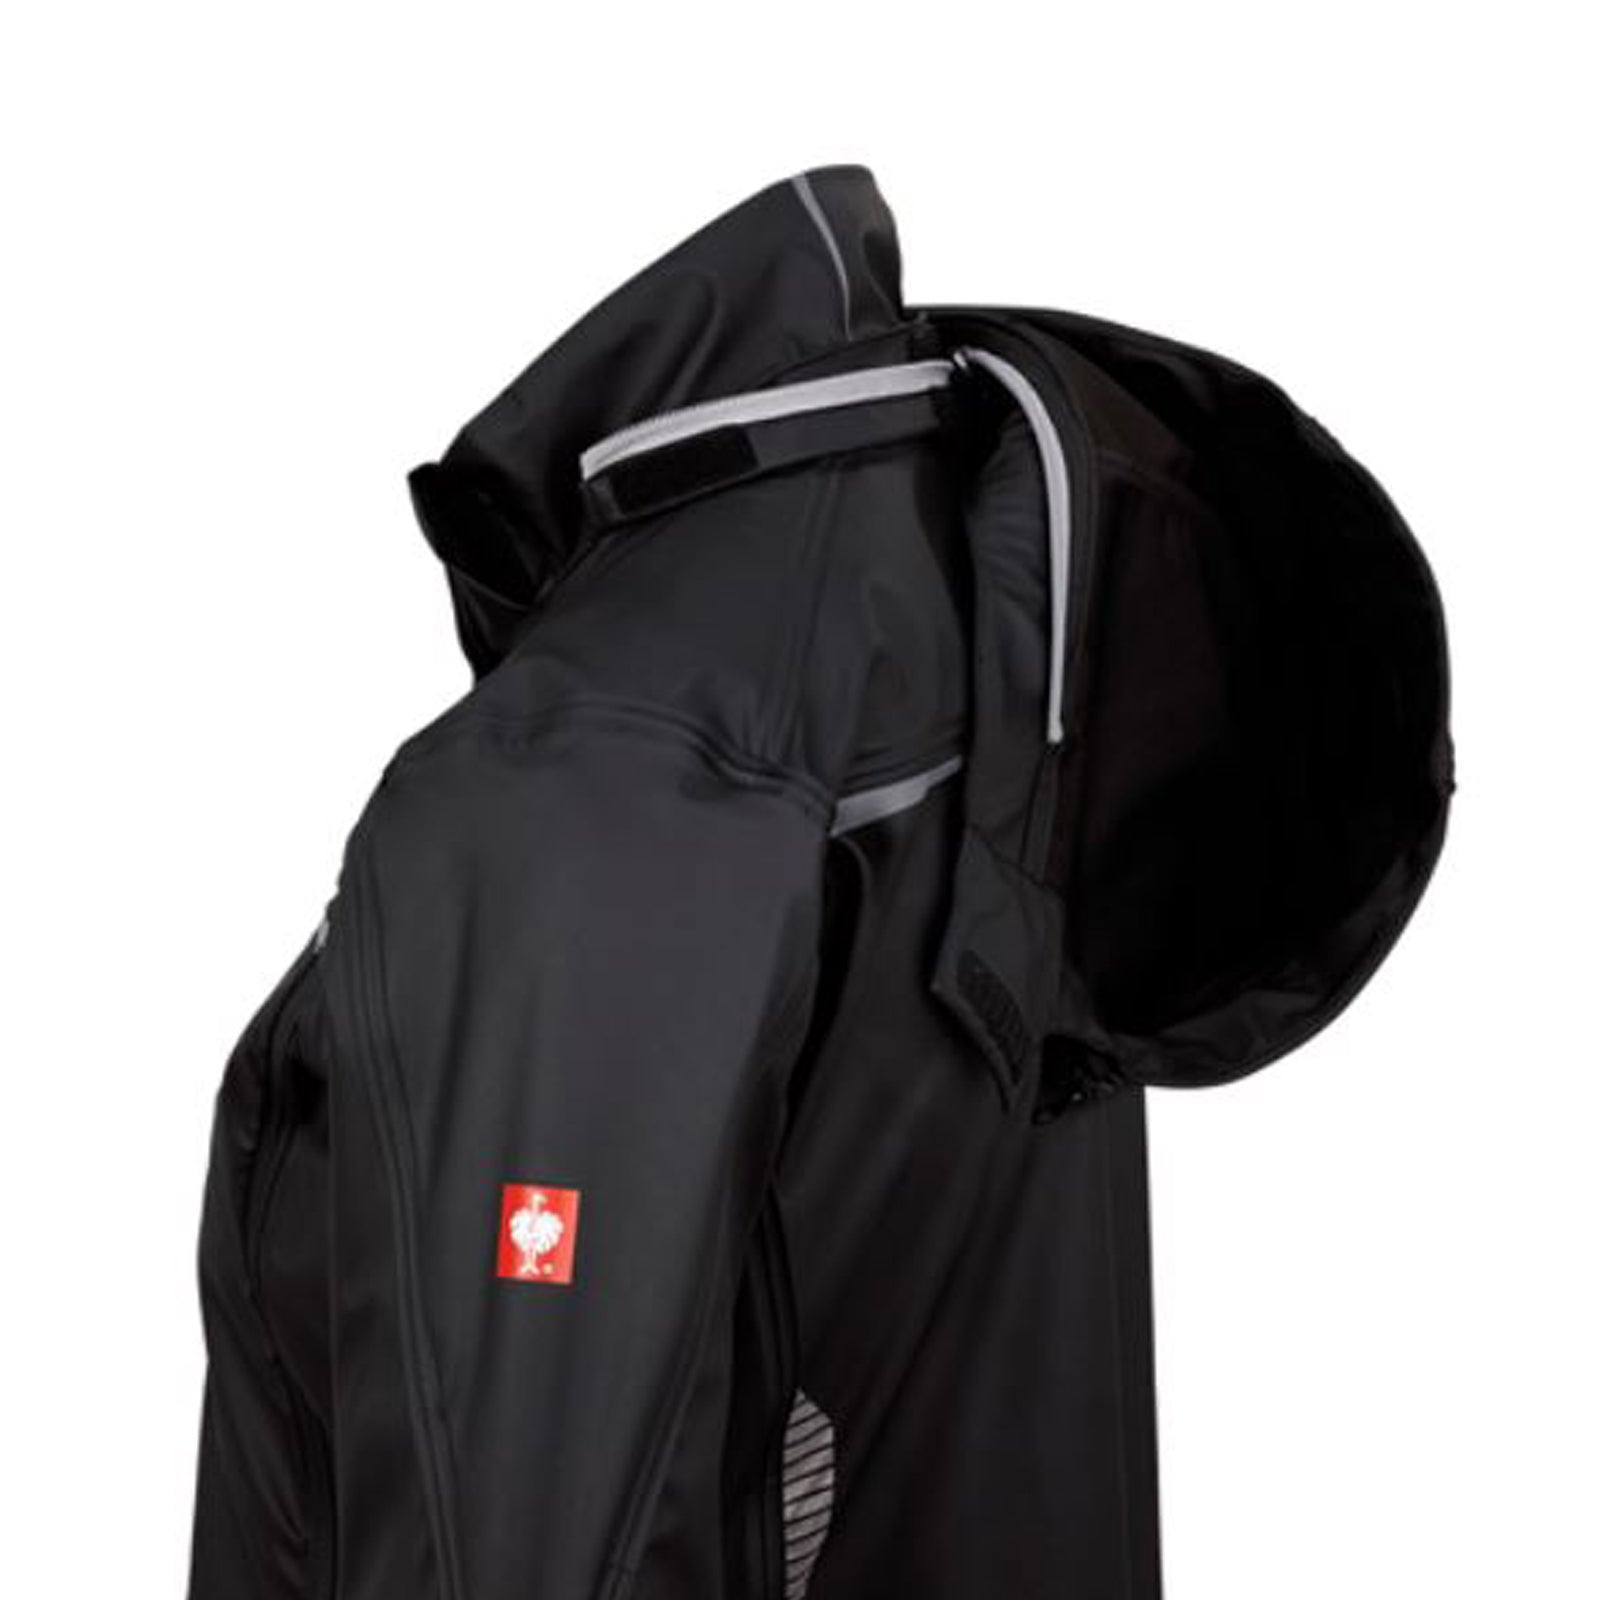 engelbert strauss Rain jacket e.s.motion 2020 superflex- German Workwear